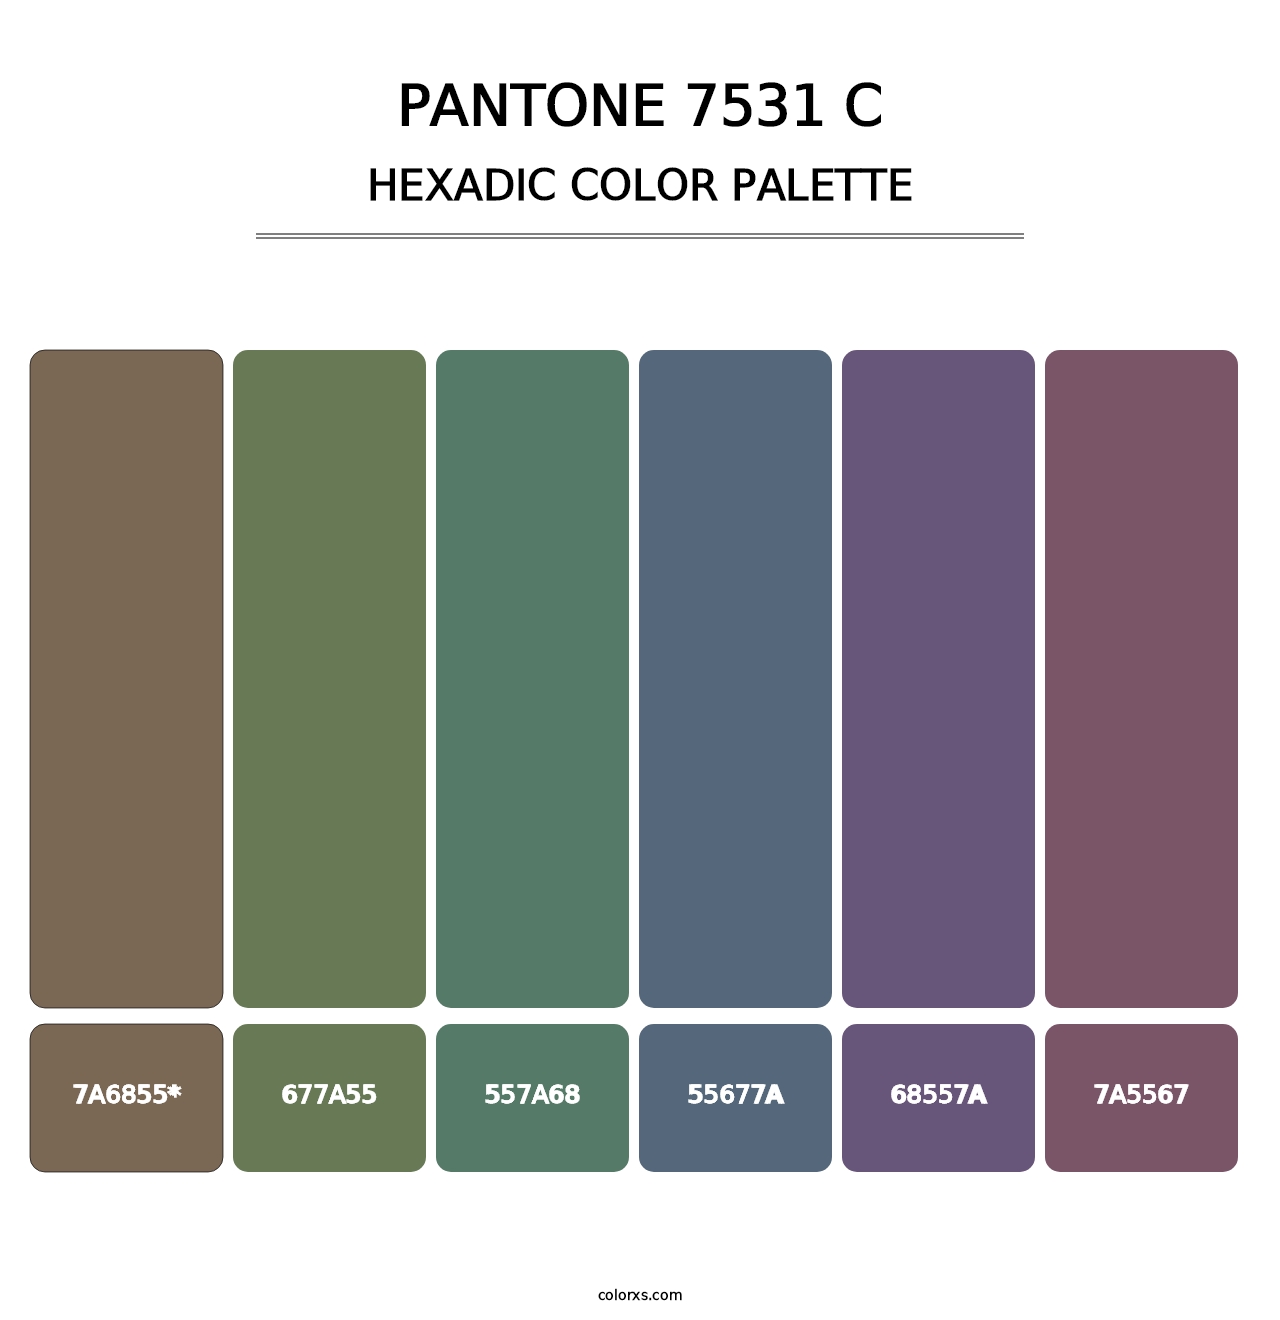 PANTONE 7531 C - Hexadic Color Palette